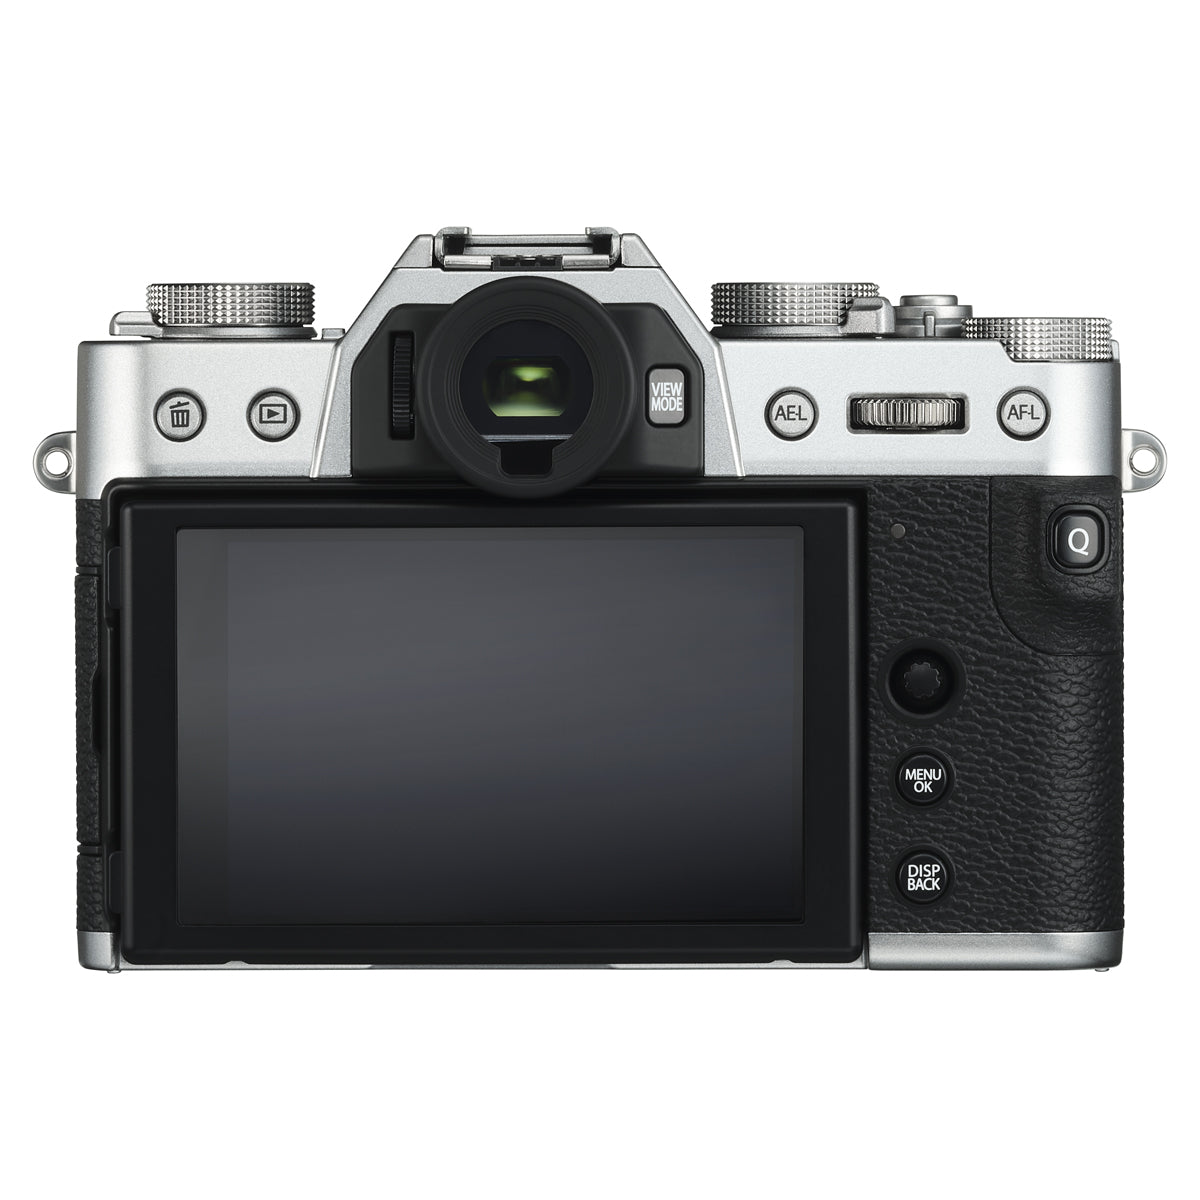 Fujifilm X-T30 Mirrorless Body with XF 18-55mm Lens Kit (Silver)